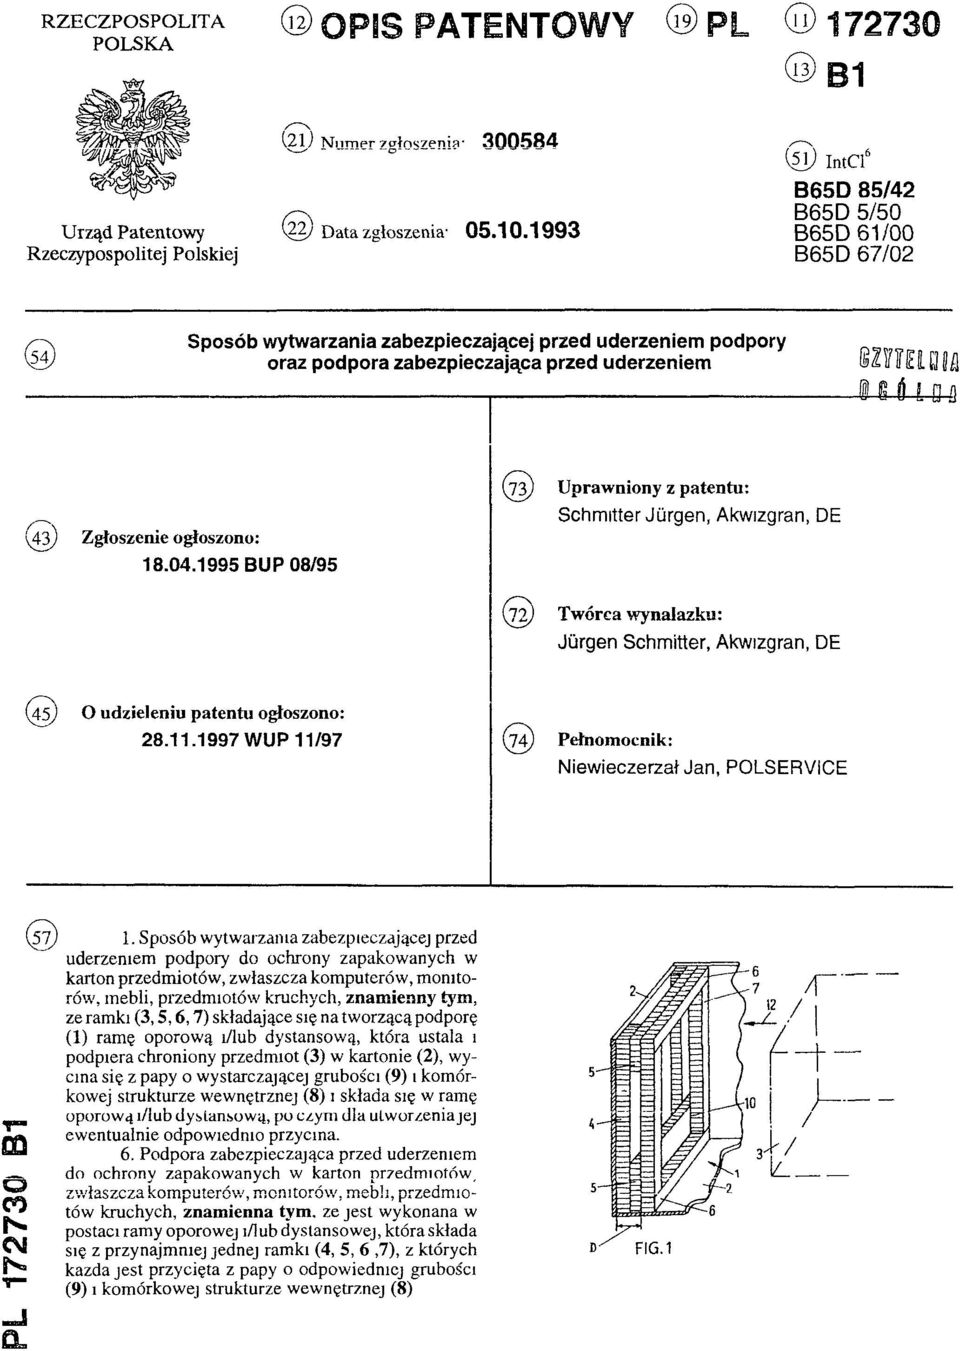 1995 BUP 08/95 (73) Uprawniony z patentu: Schmitter Jürgen, Akwizgran, DE (72) Twórca wynalazku: Jürgen Schmitter, Akwizgran, DE (45) O udzieleniu patentu ogłoszono: 28.11.